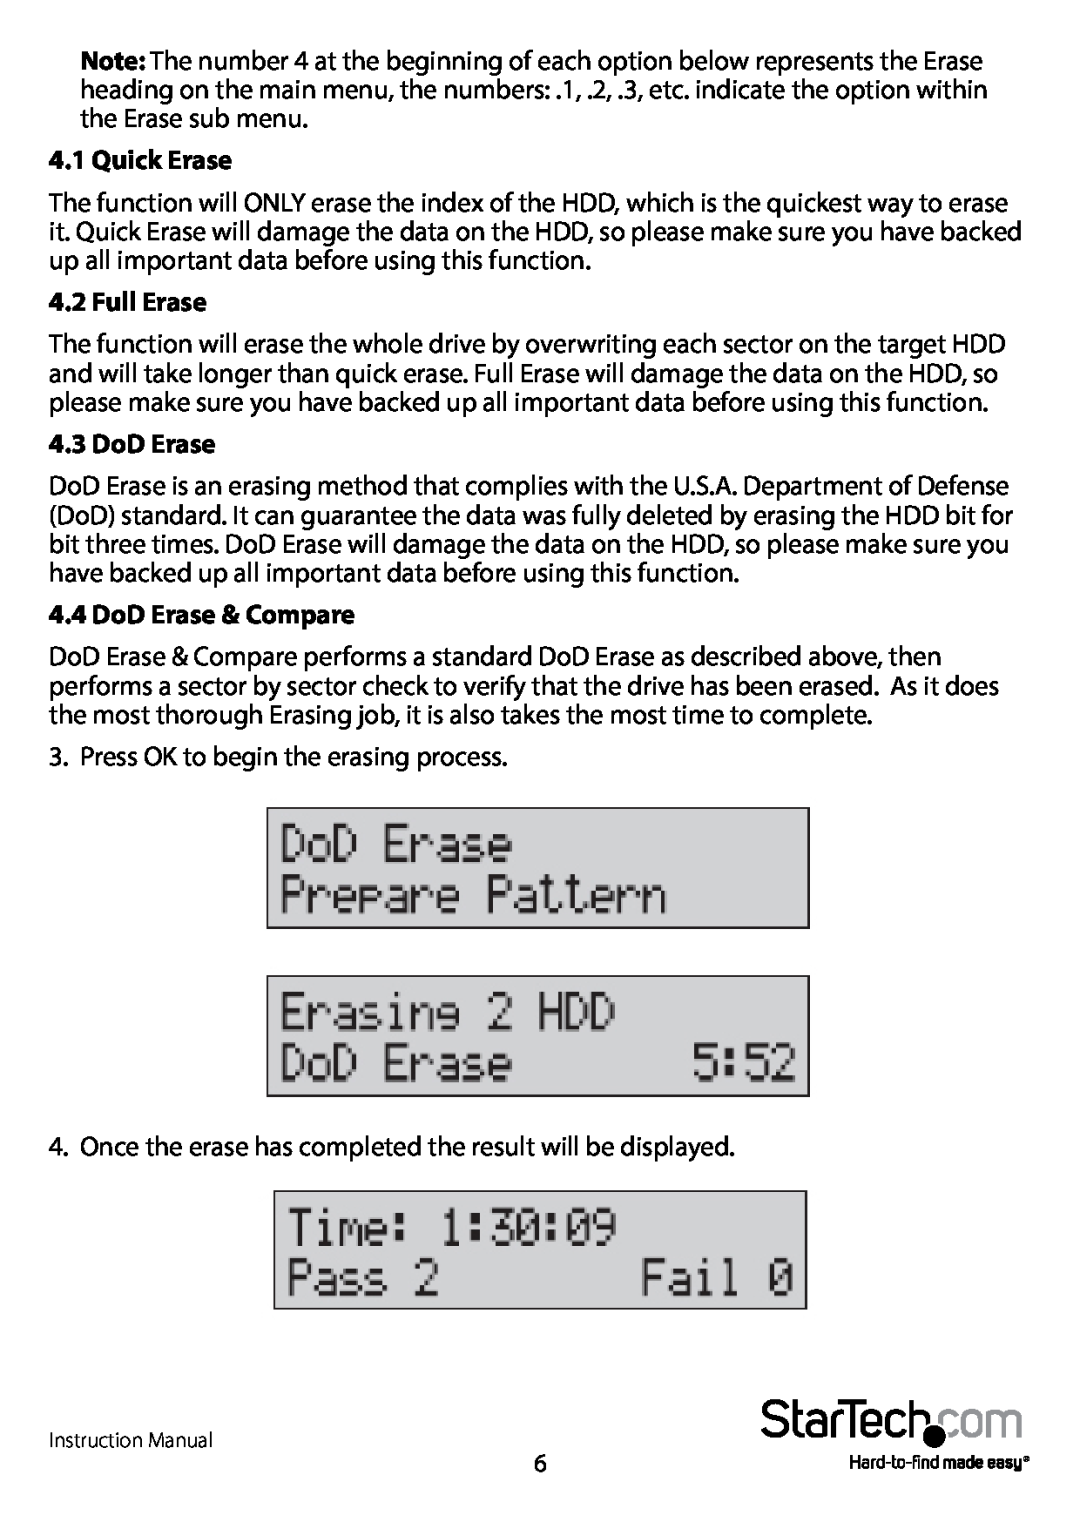 StarTech.com SATDUP13 manual Quick Erase, Full Erase, DoD Erase & Compare 